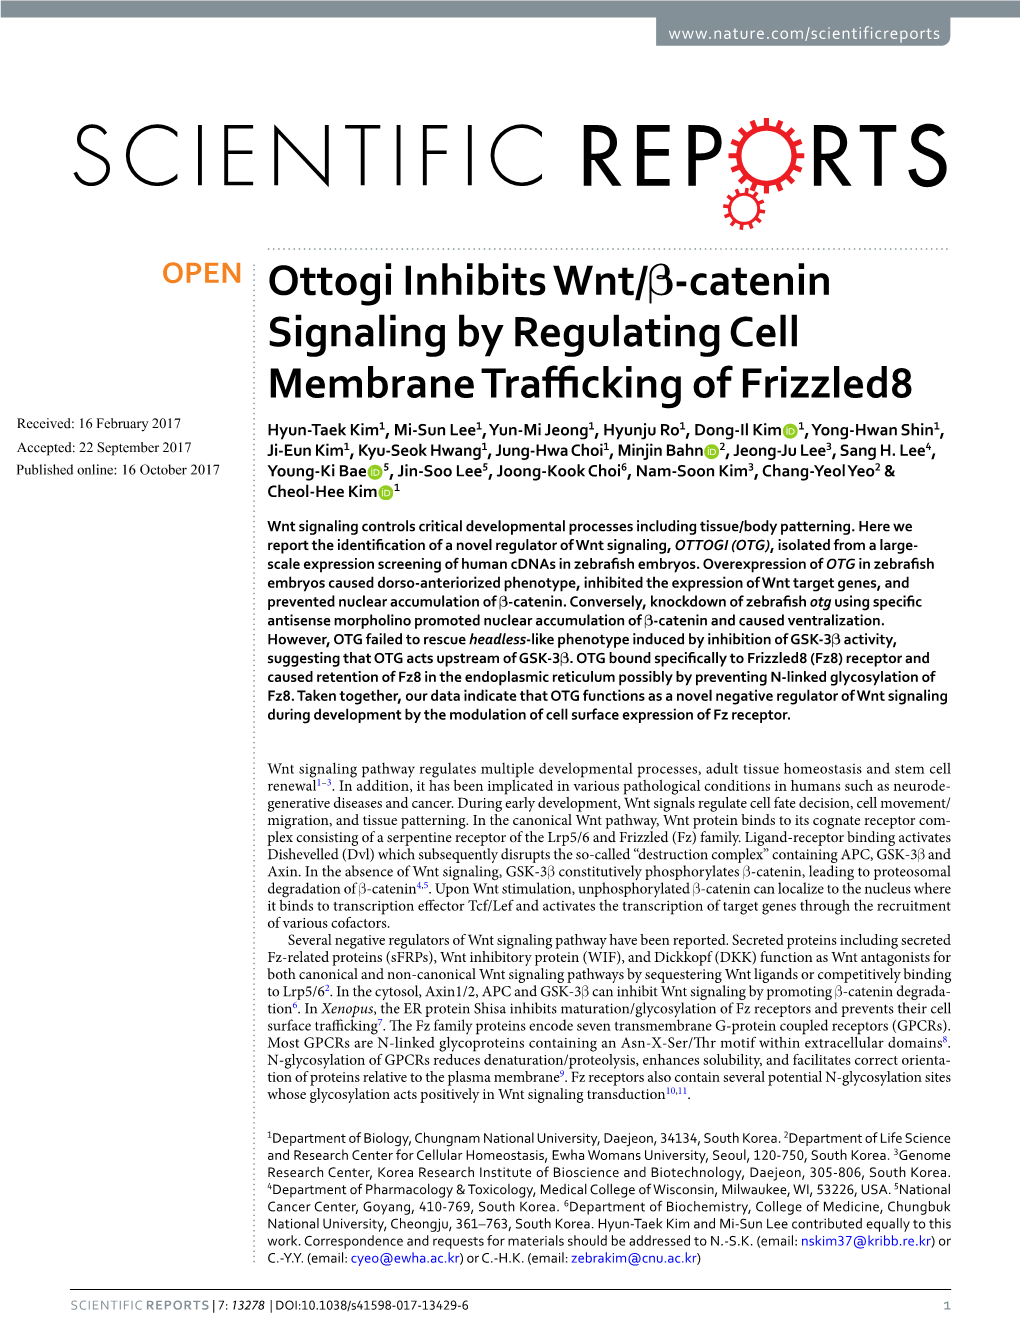 Ottogi Inhibits Wnt/Β-Catenin Signaling by Regulating Cell Membrane